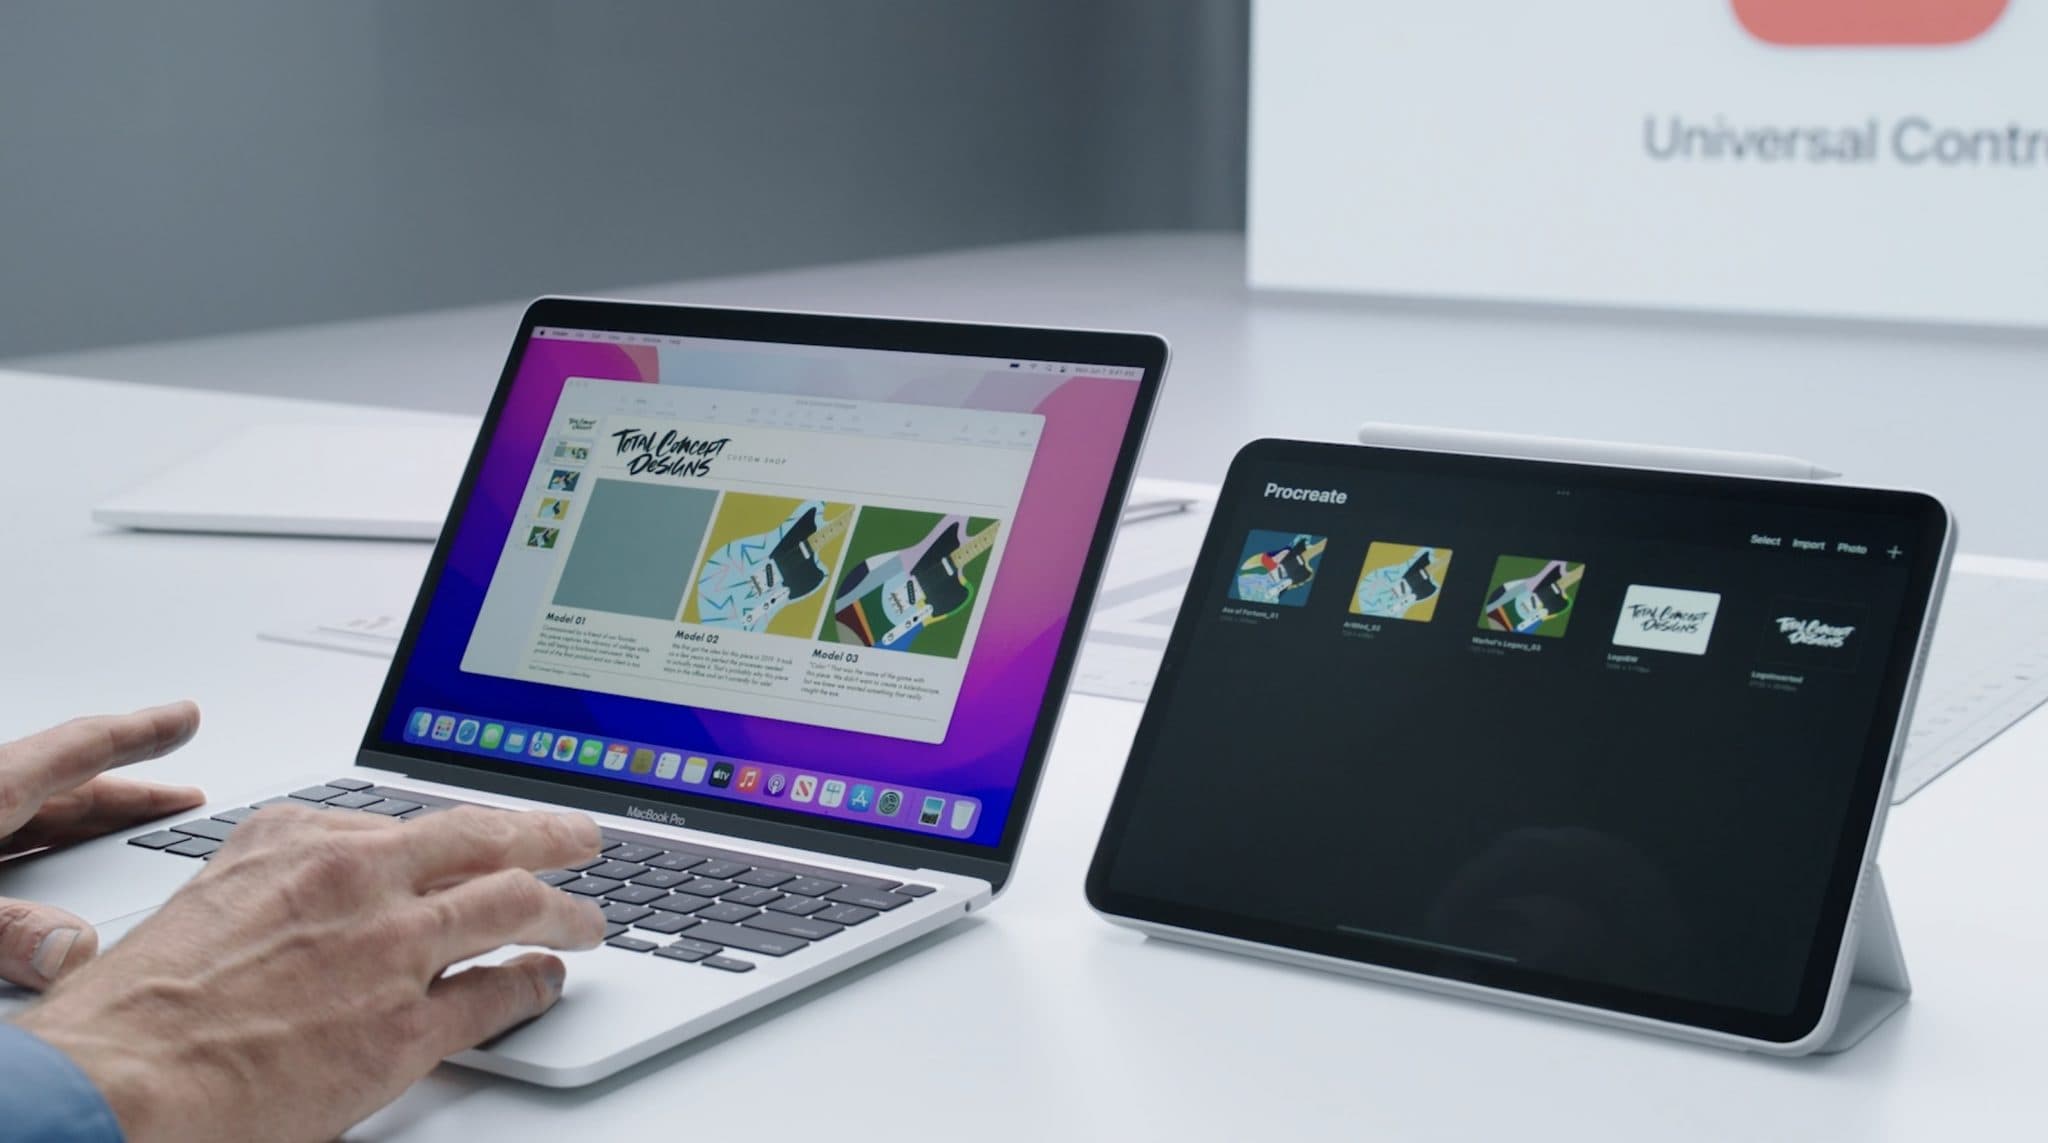 macOS Monterey brings Universal Control, Shortcuts, and Safari